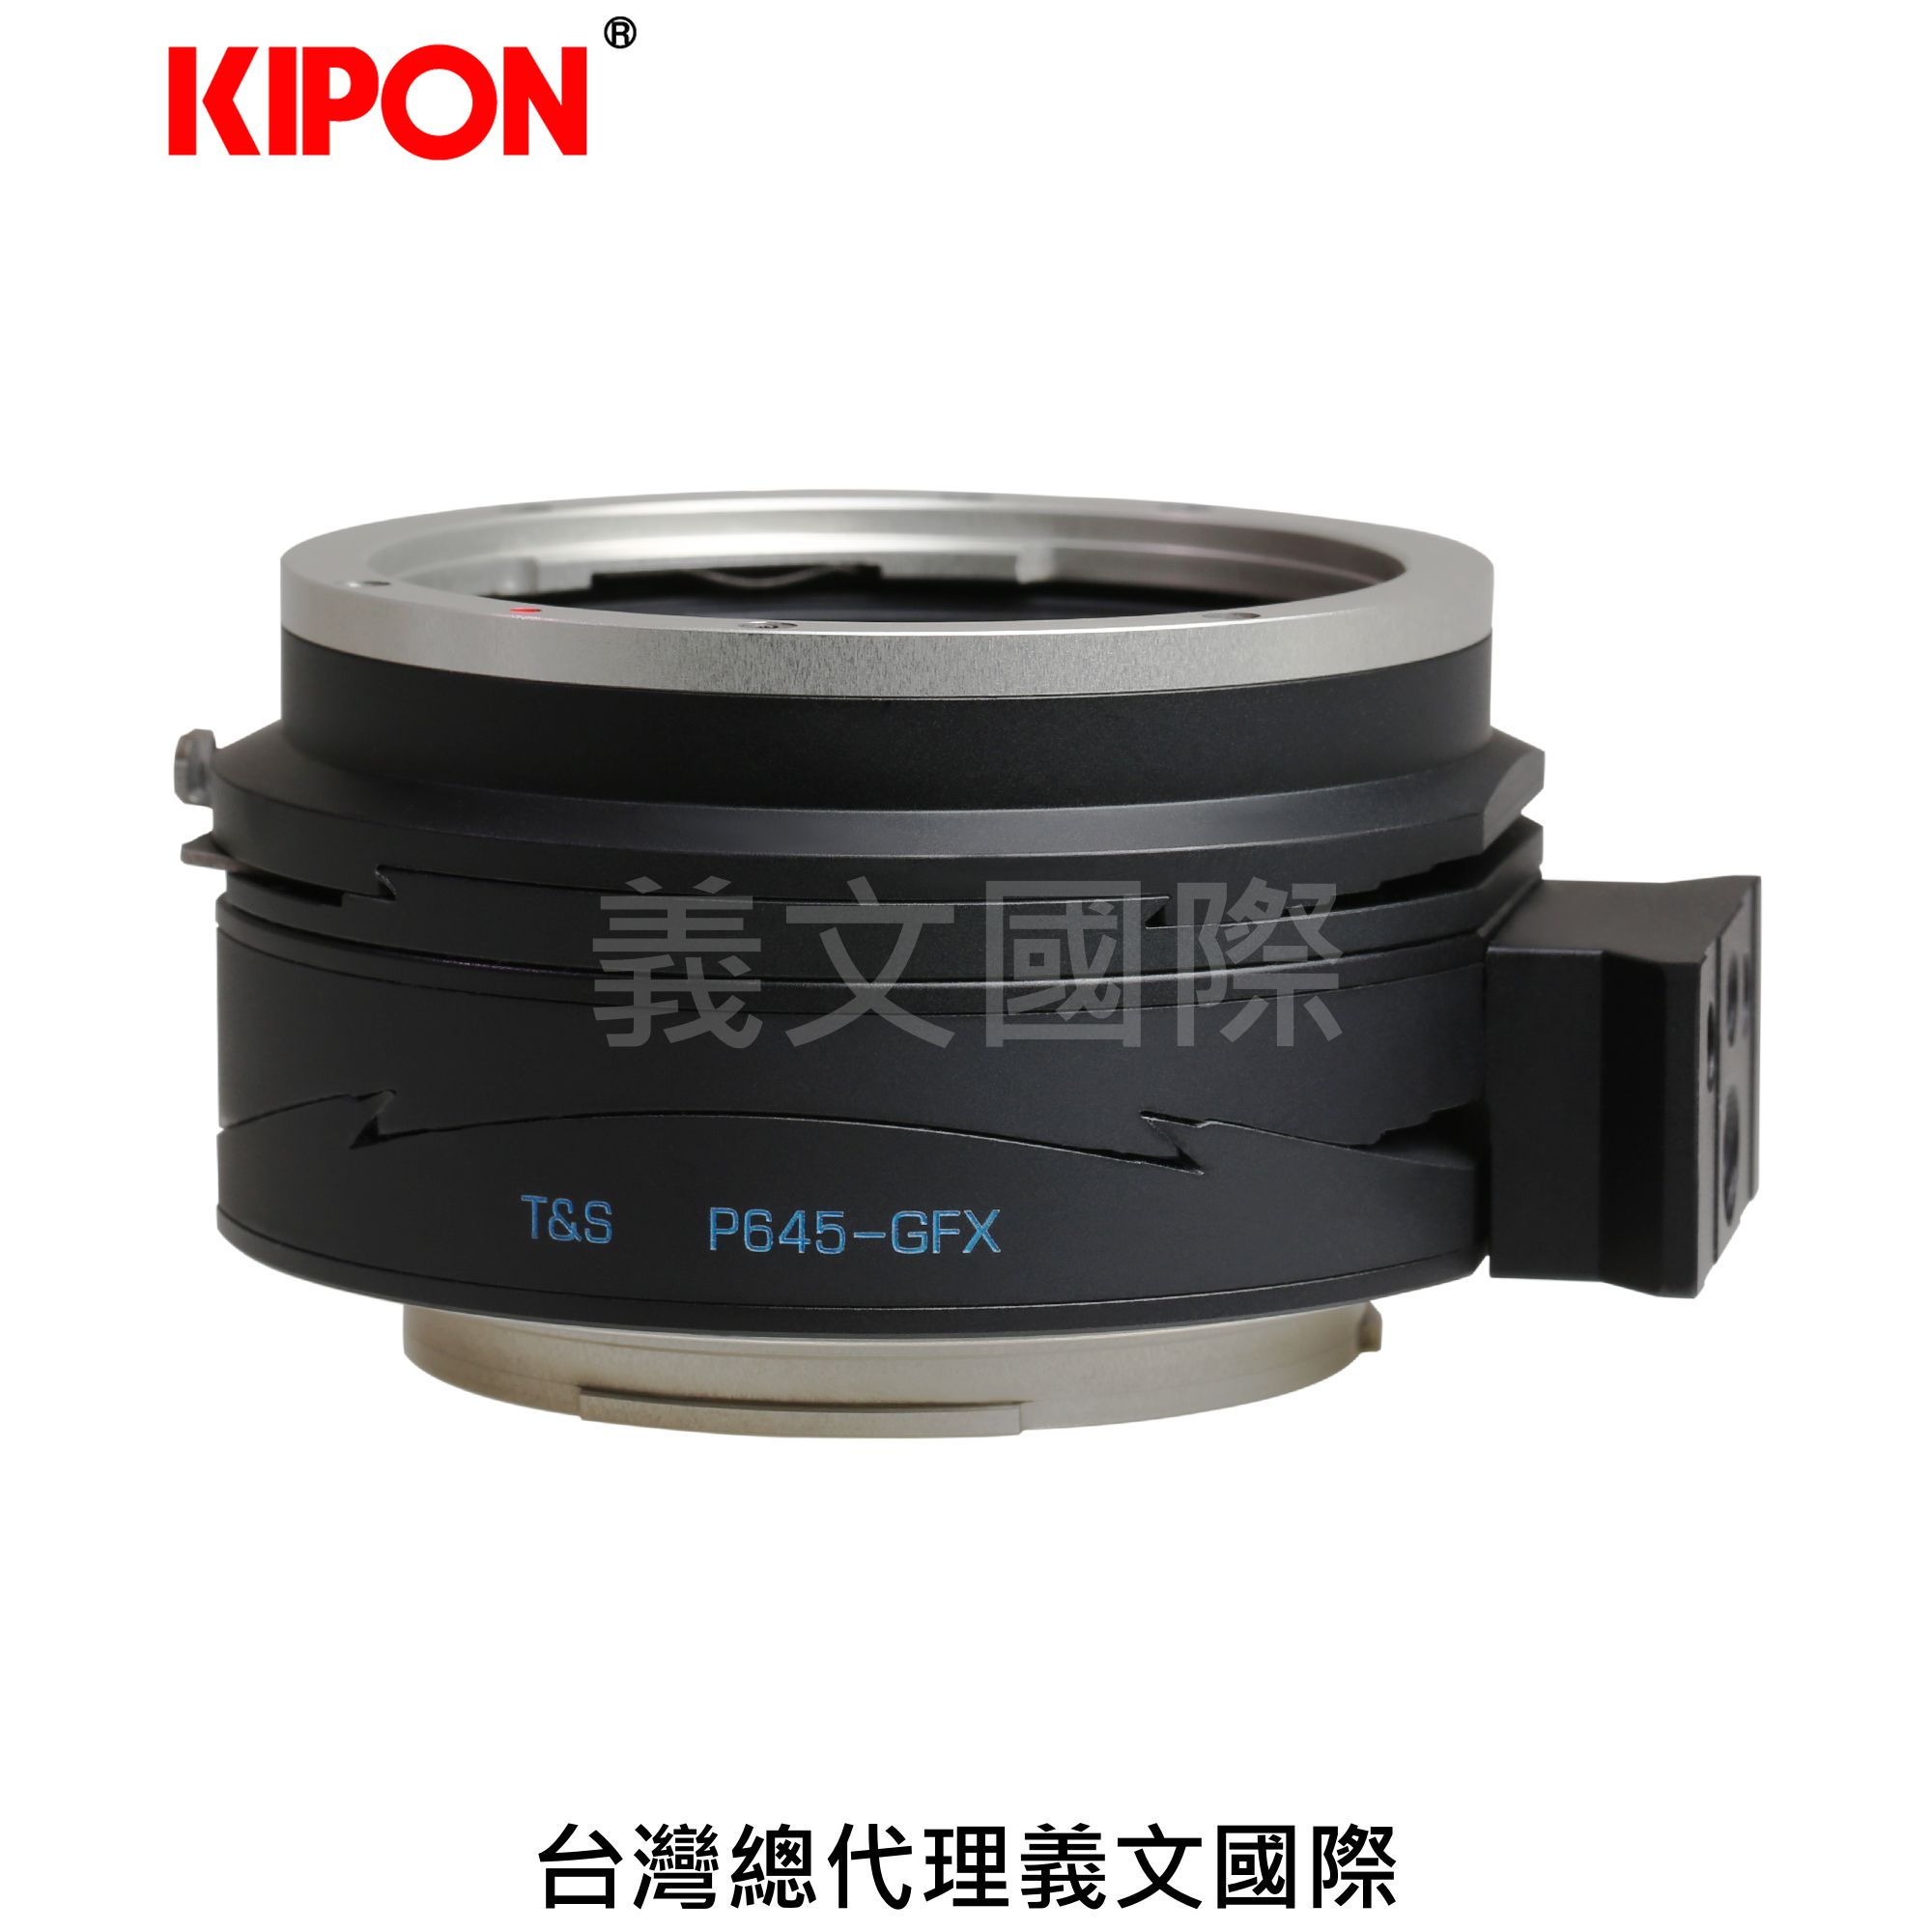 Kipon轉接環專賣店:PRO T&S P645-GFX(Fuji,富士,GFX-100,GFX-50S,GFX-50R)